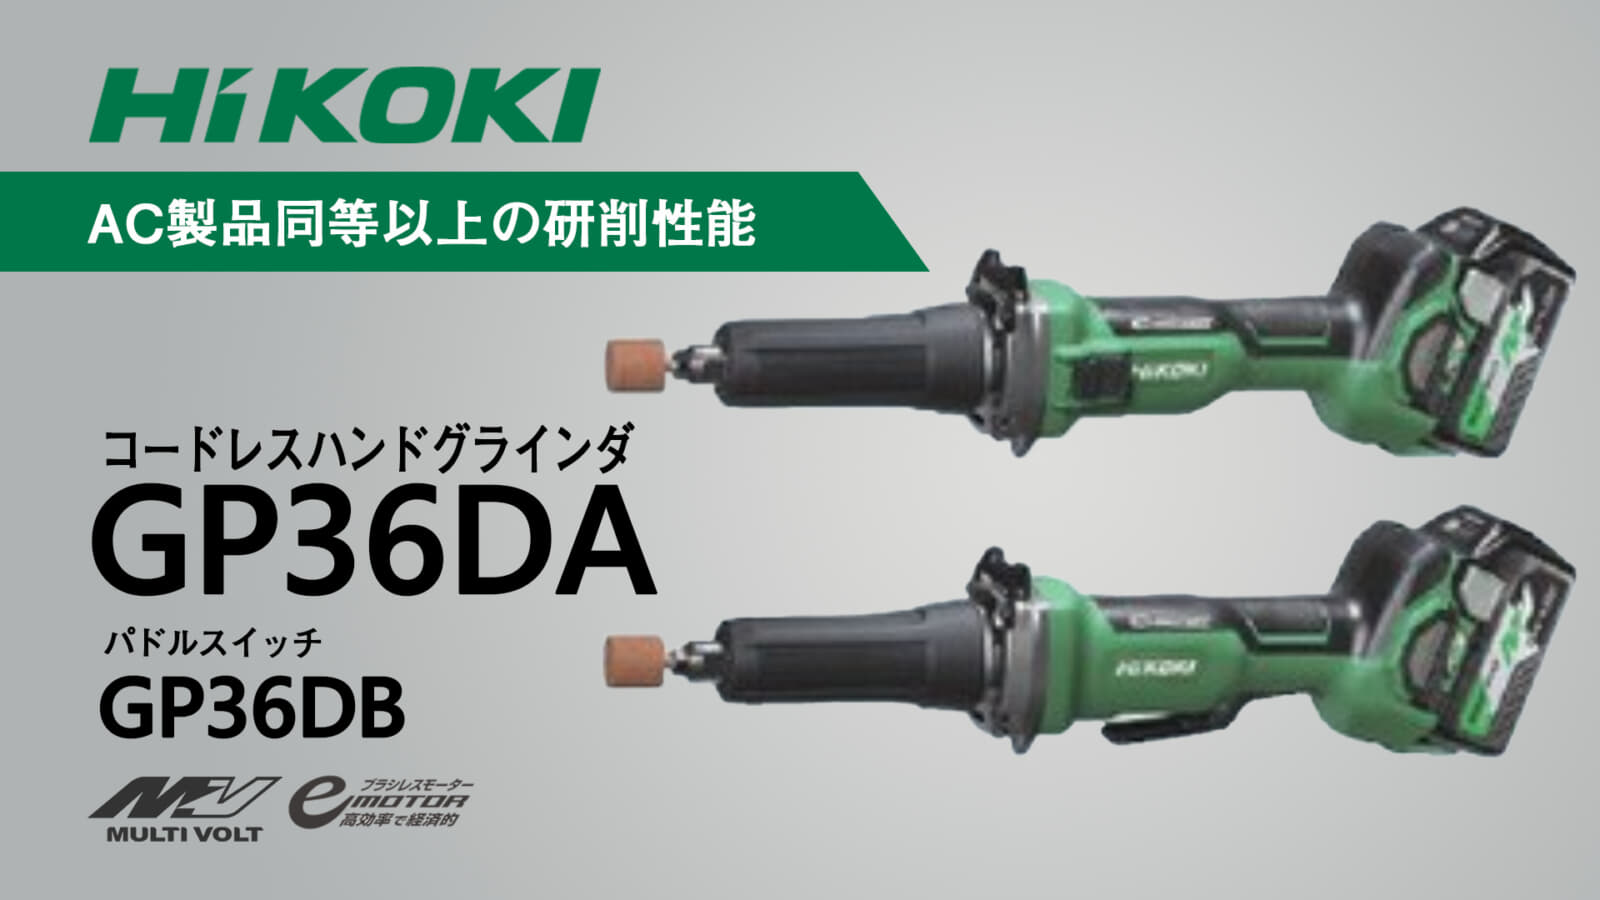 HiKOKI GP36DA 36Vコードレスハンドグラインダを発売、電源コード式を超えるパワフル切削